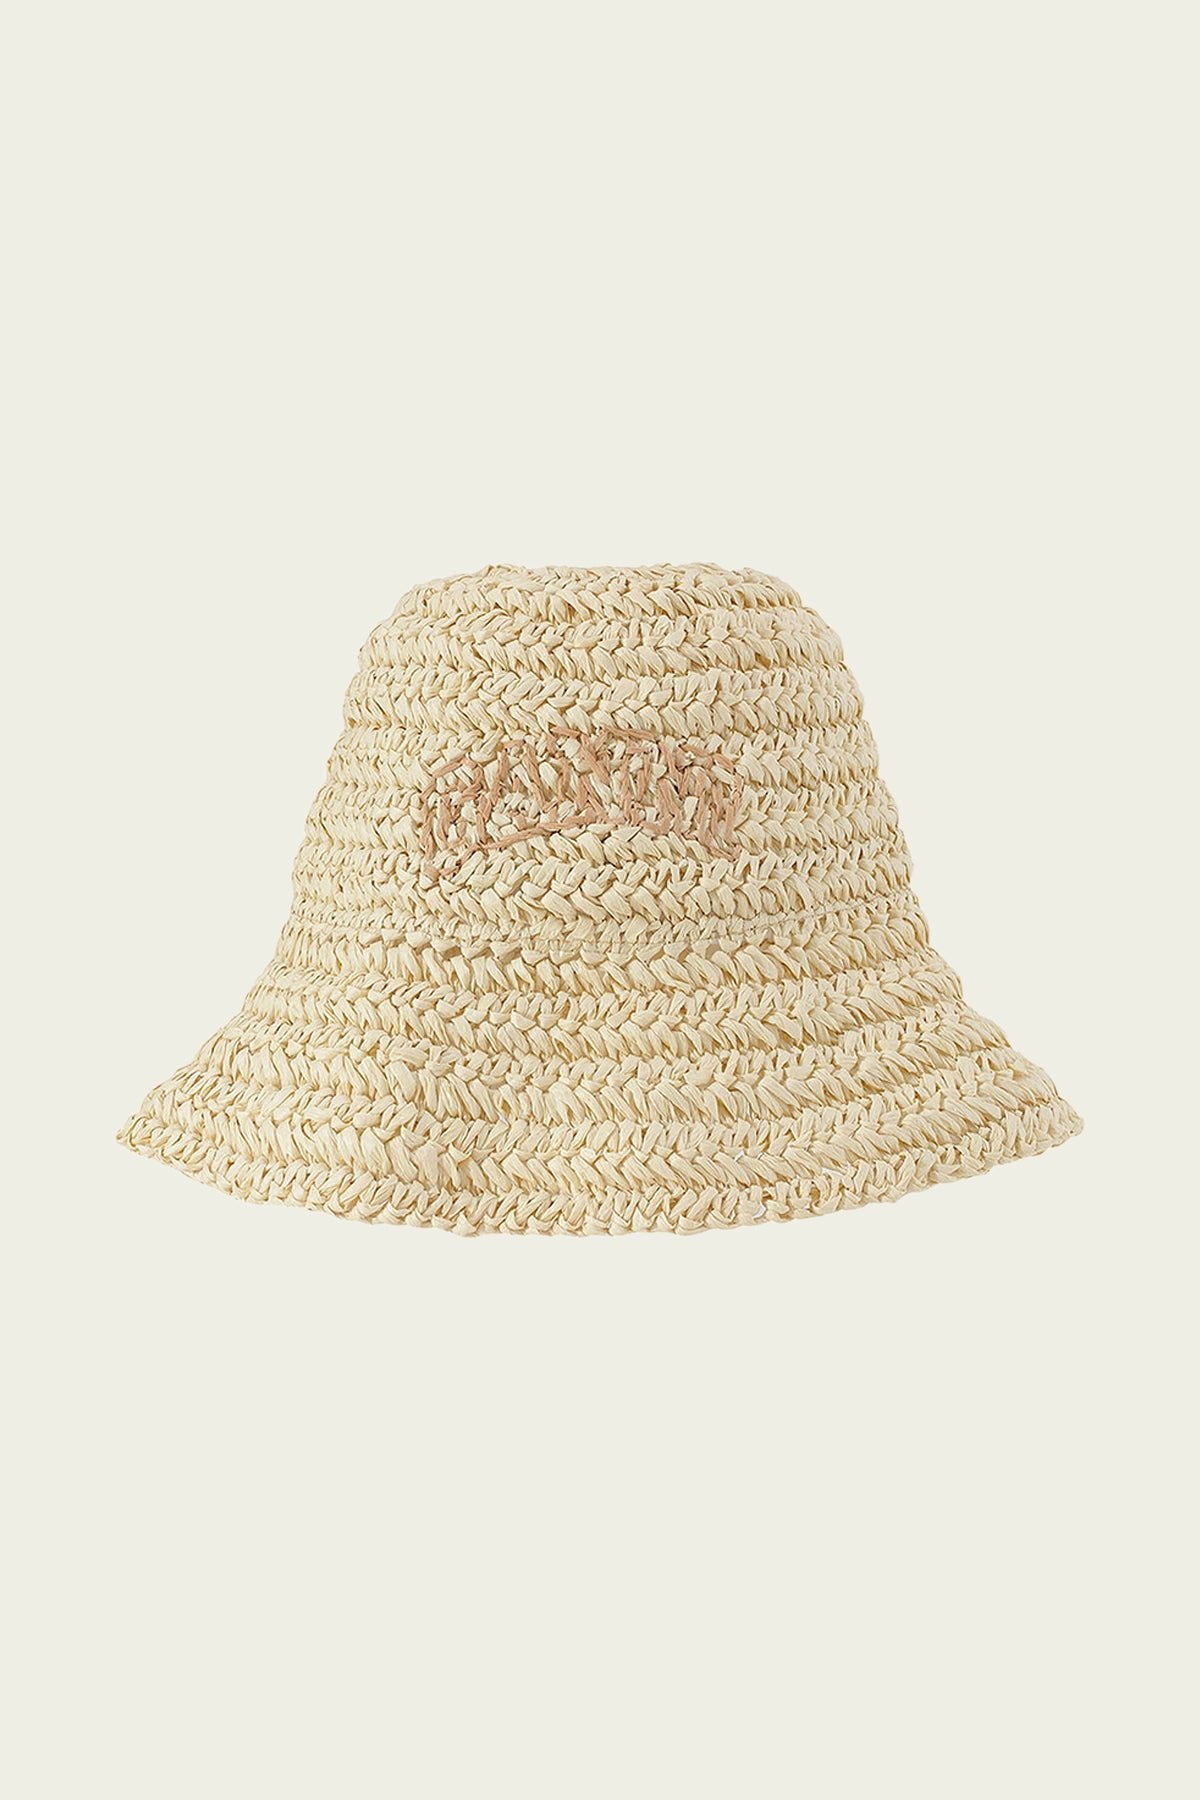 Summer Straw Hat in Beige - shop-olivia.com